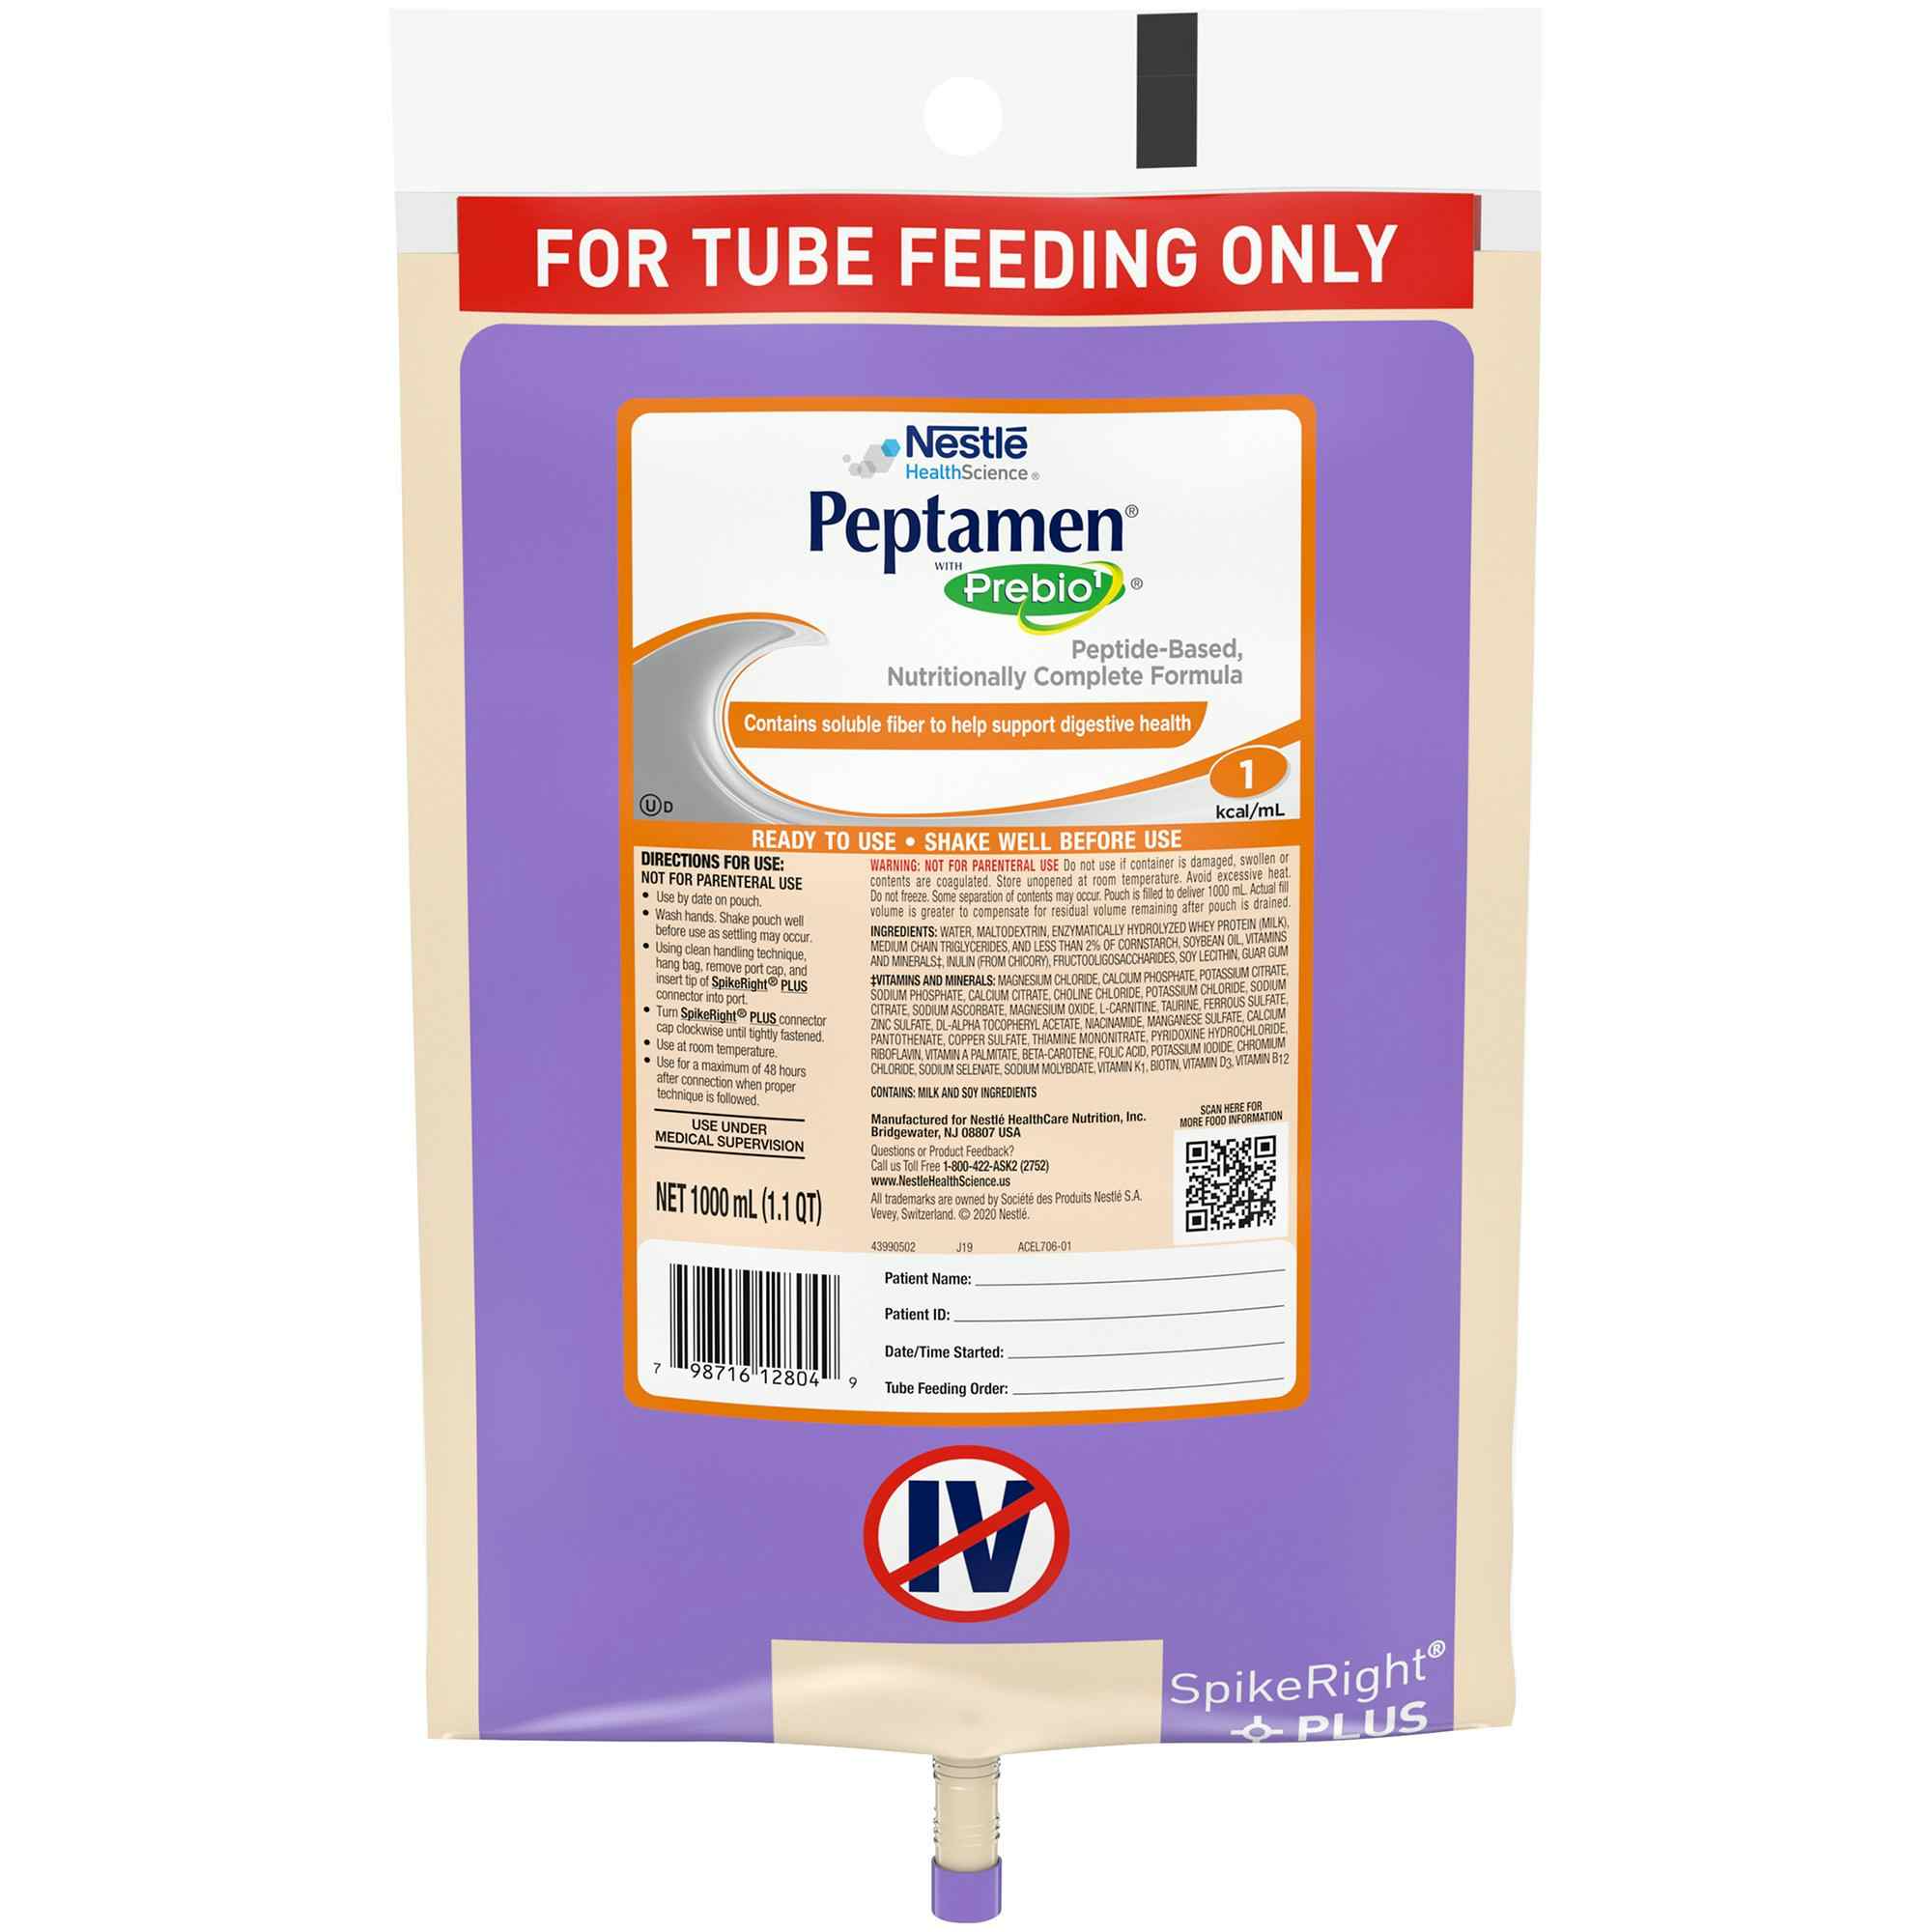 Peptamen with Prebio1 Peptide-Based Nutritionally Complete Tube Feeding Formula, 33.8 oz.